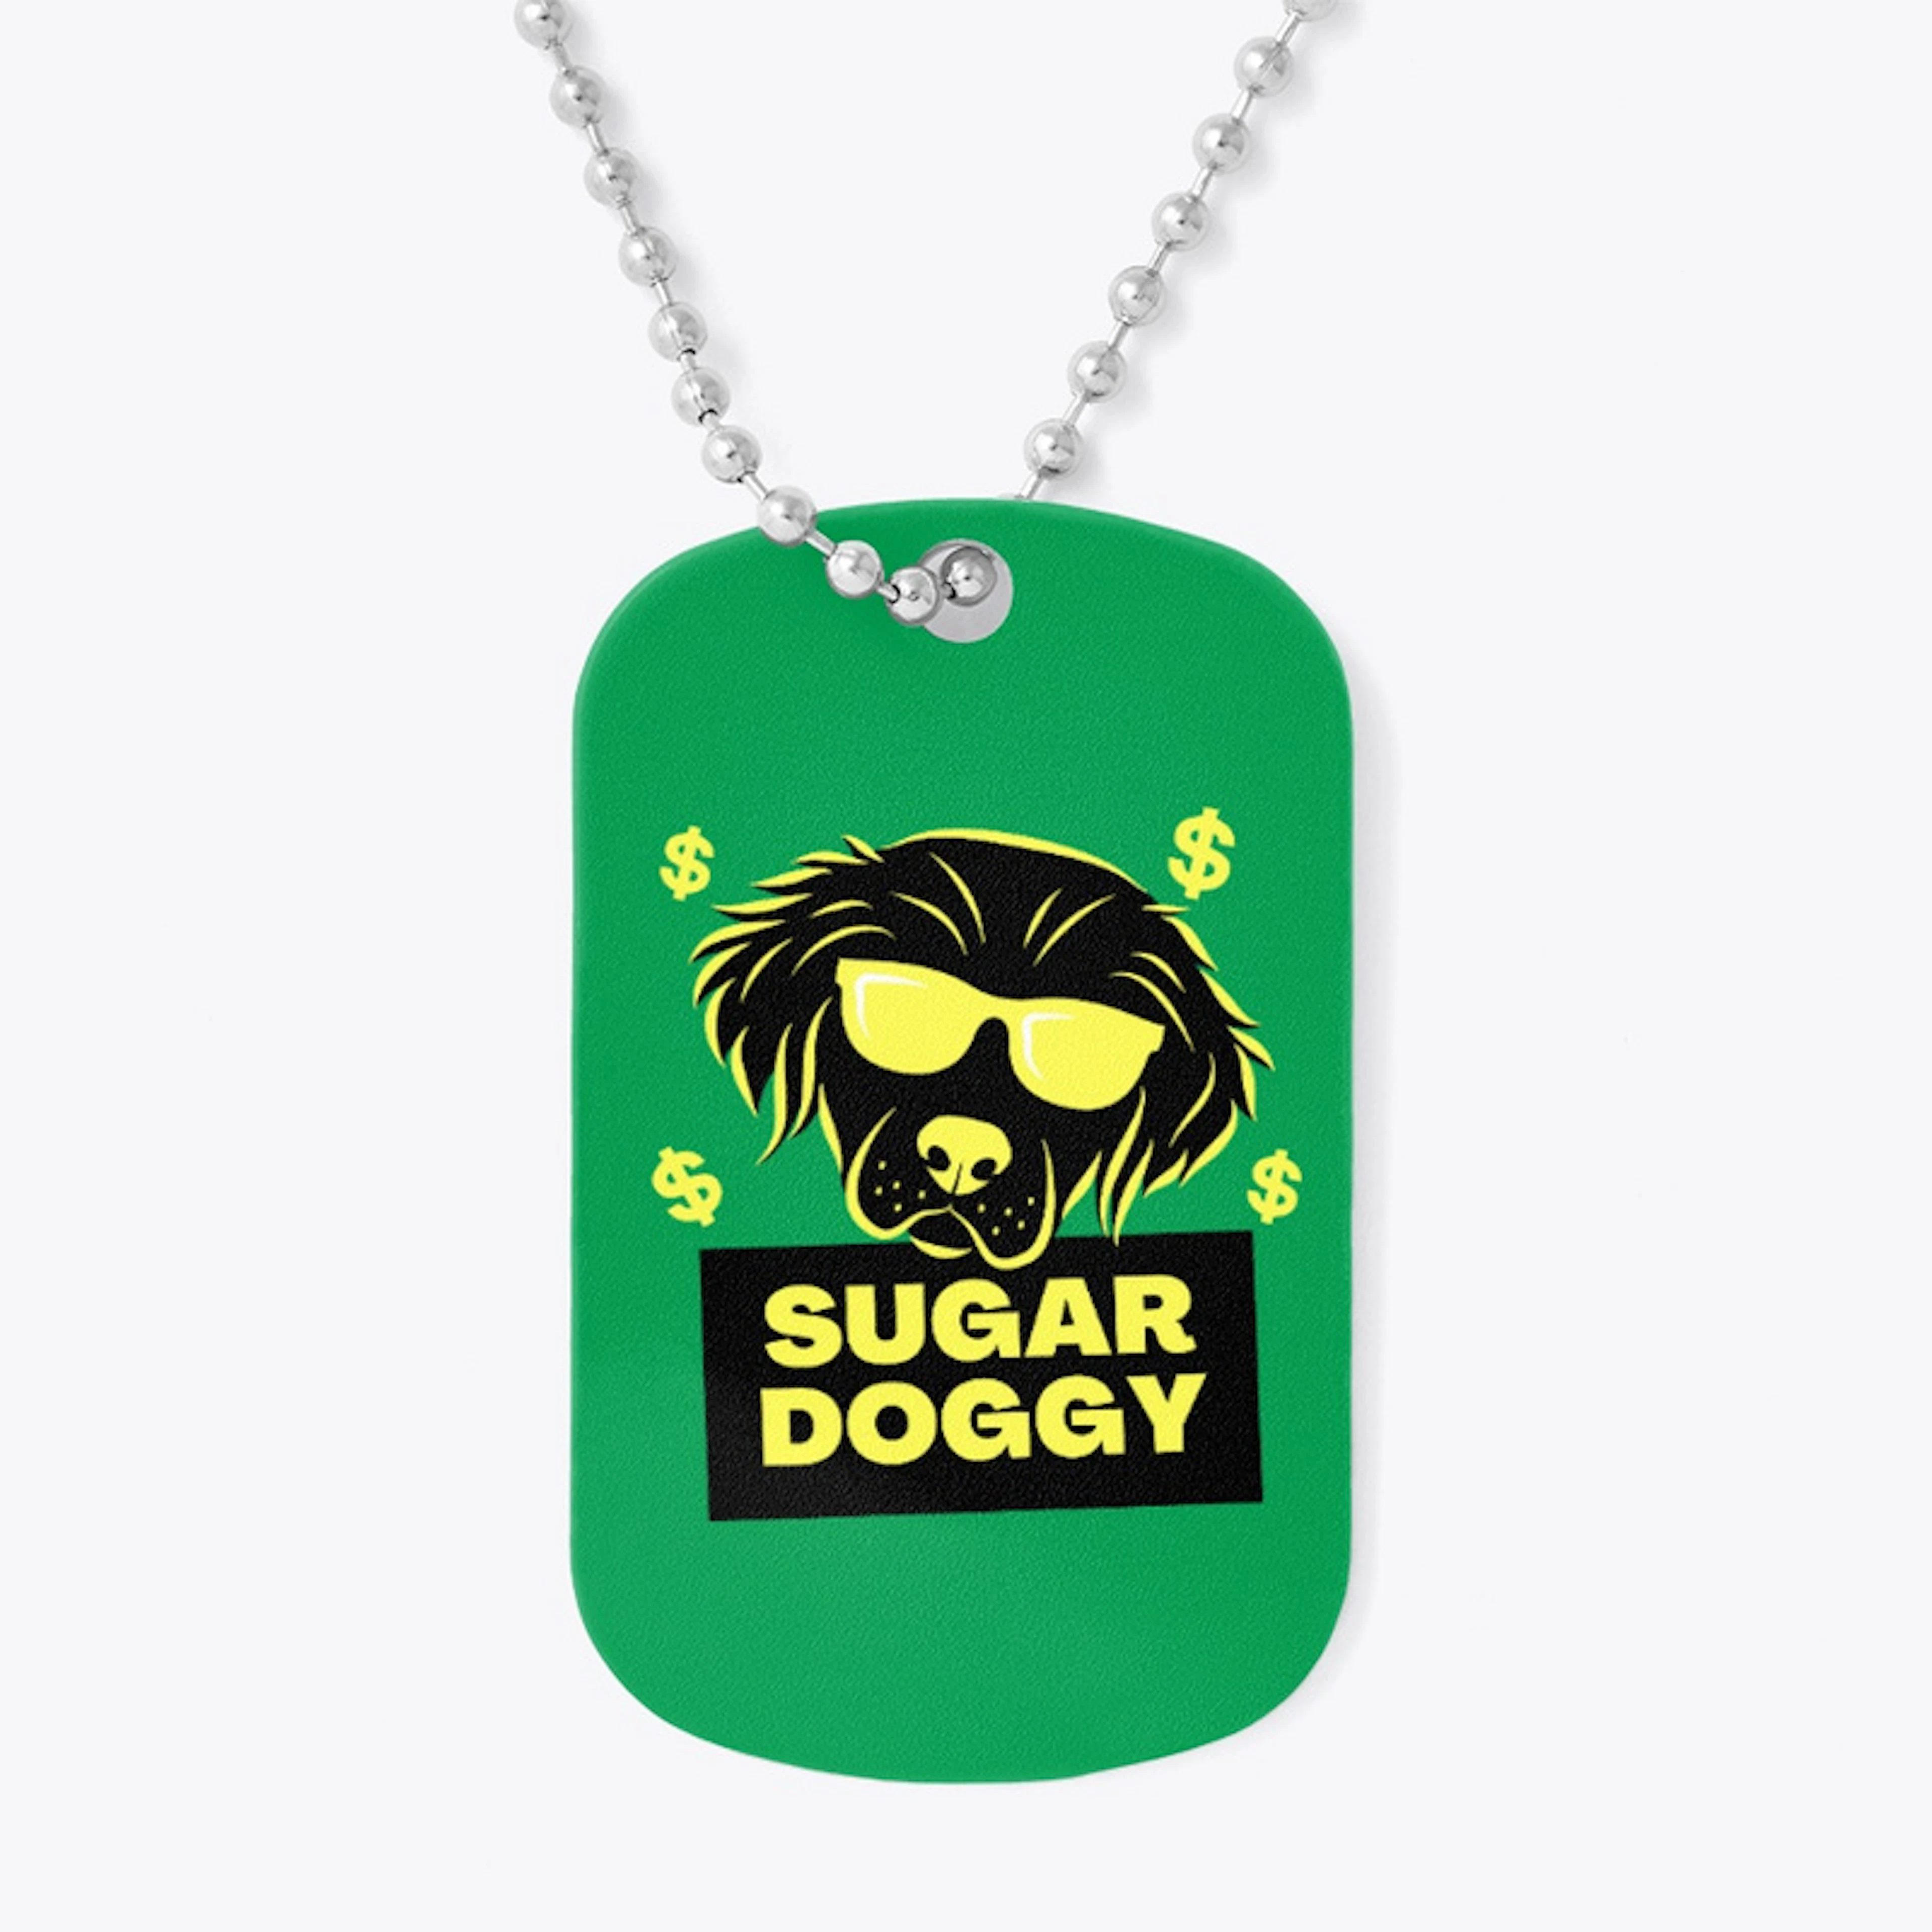 Sugar Doggy - The Swag Pup Tee